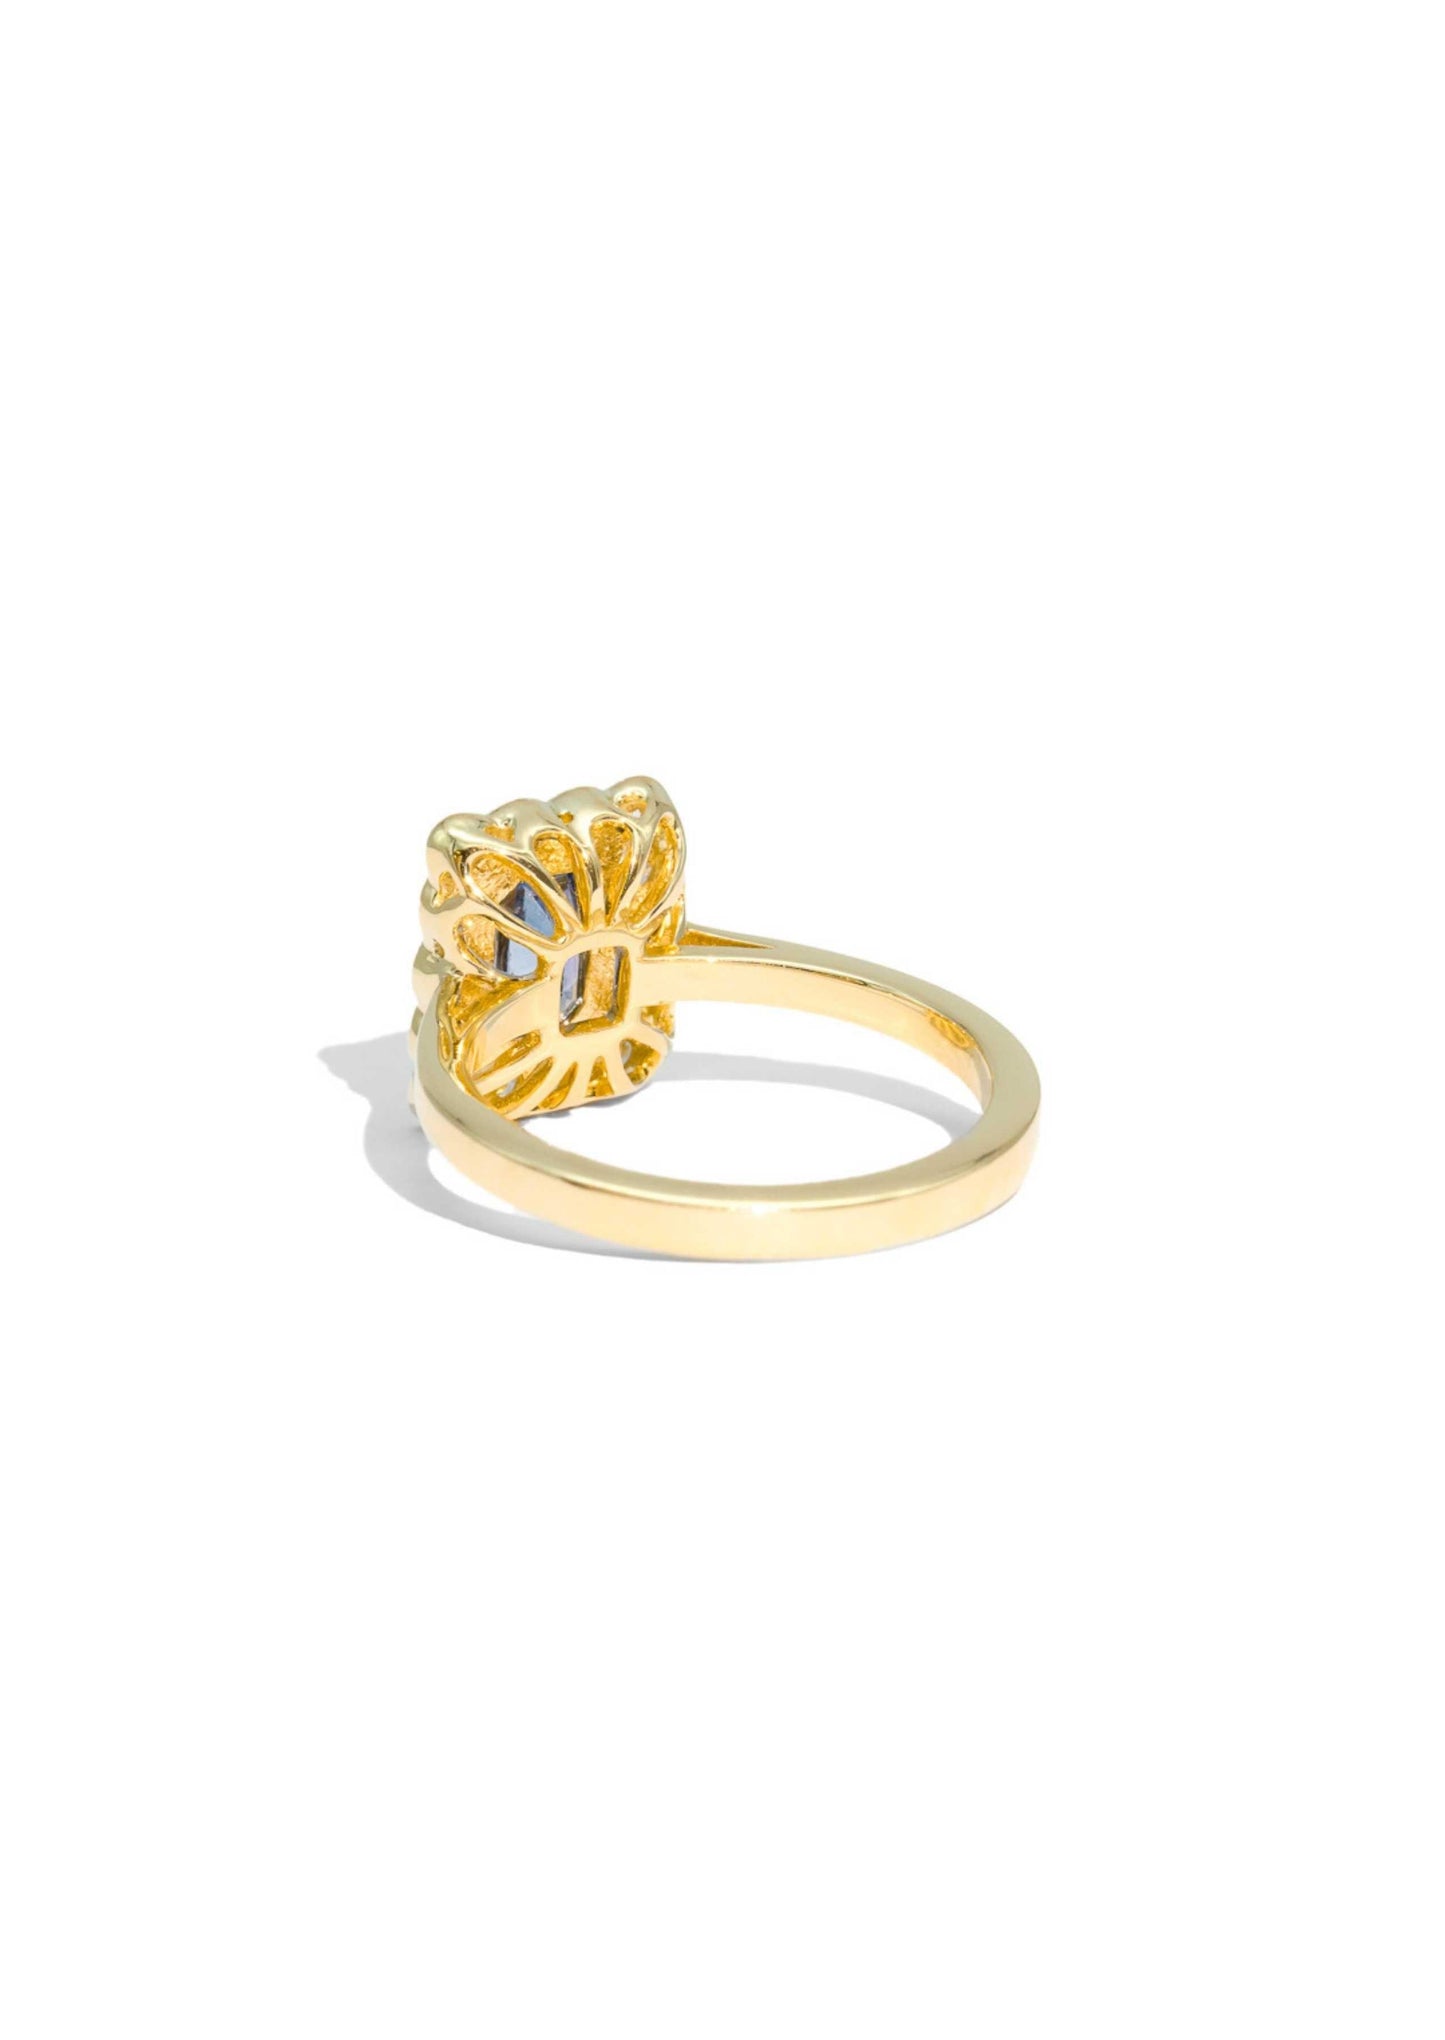 The Hazel 0.98ct Ceylon Sapphire Ring